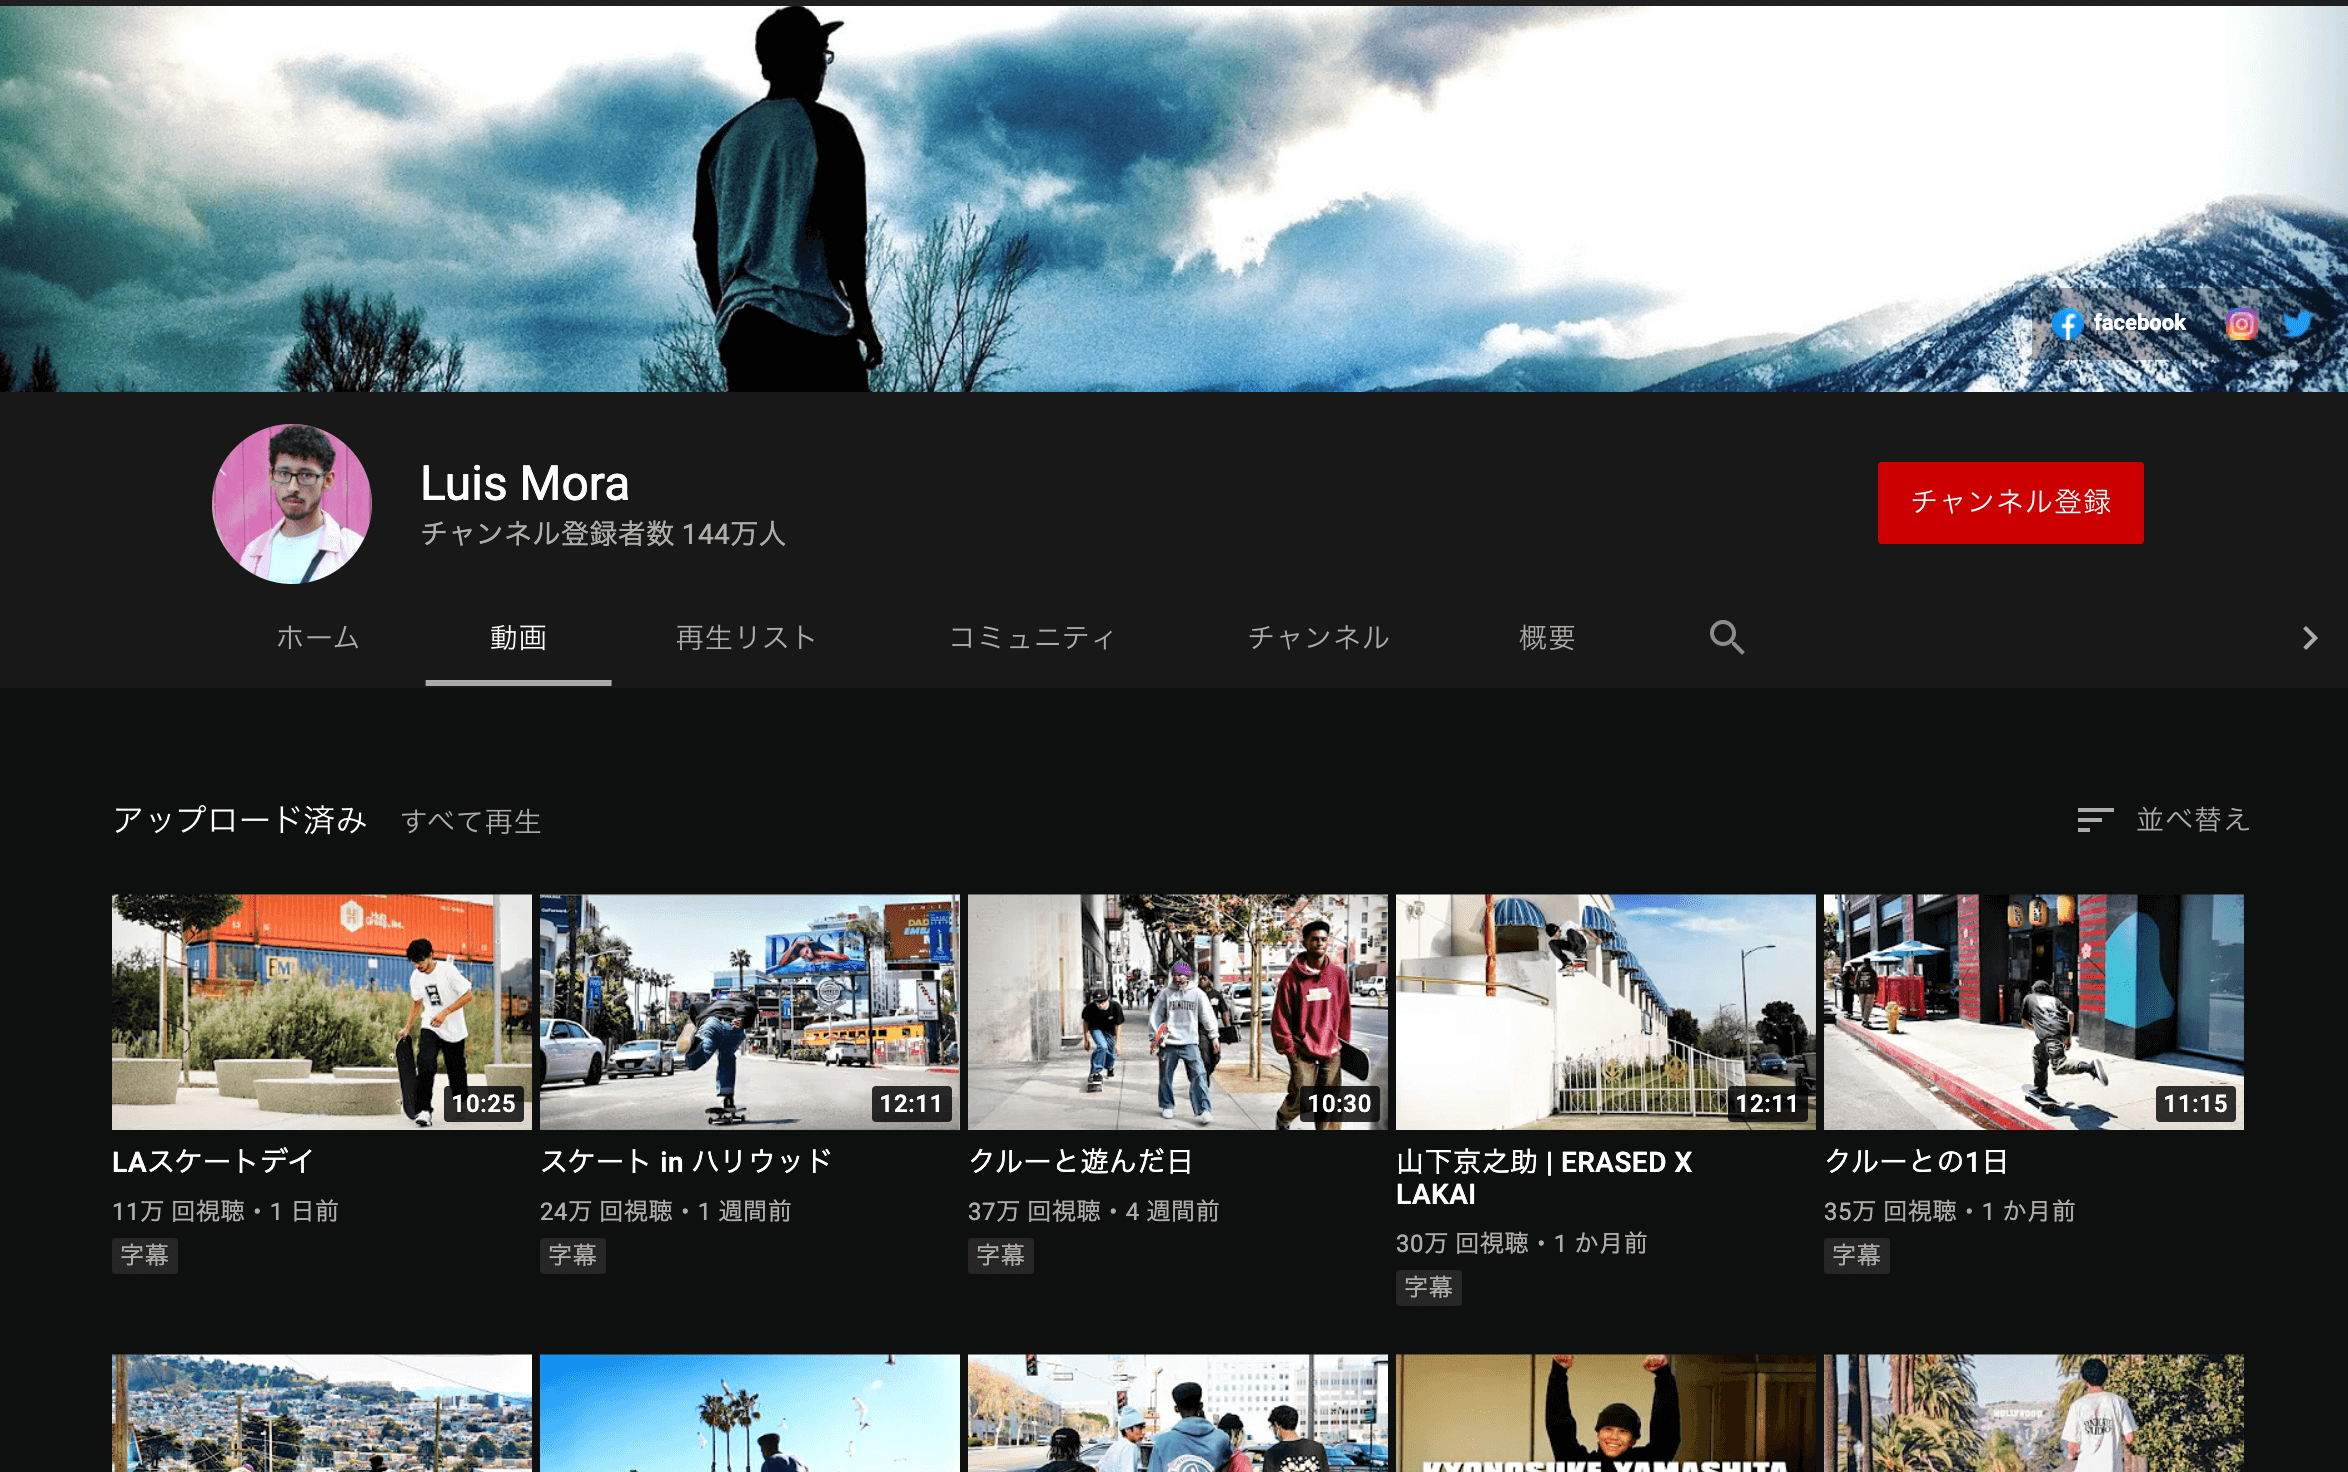 youtube_skateboard_luis mora